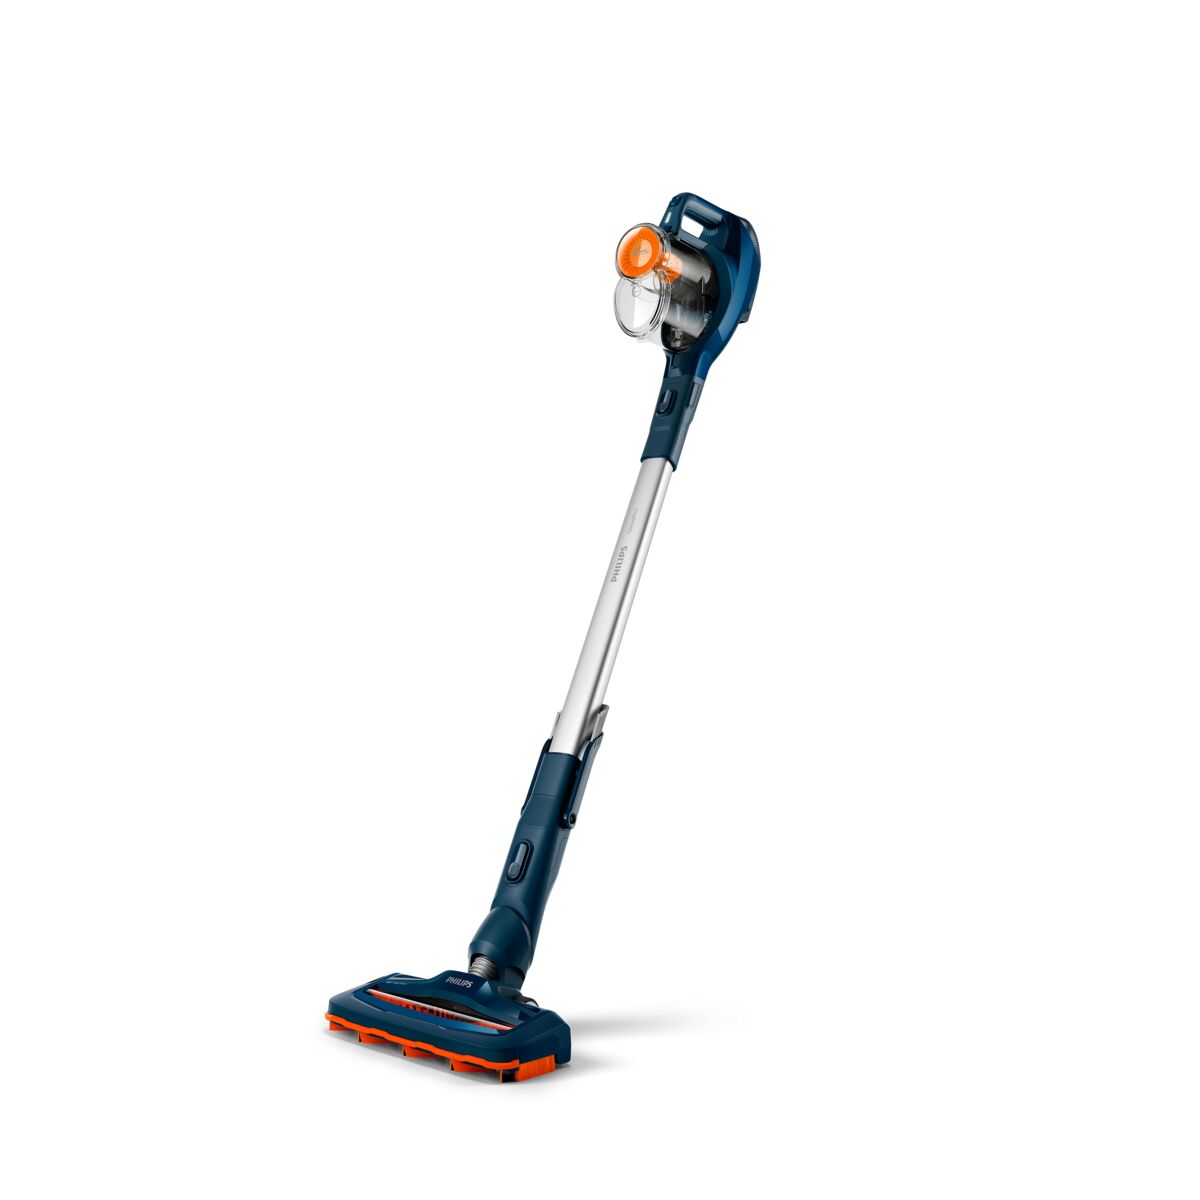 PHILIPS Cordless Stick vacuum cleaner,SpeedPro, Blue, FC6724/61